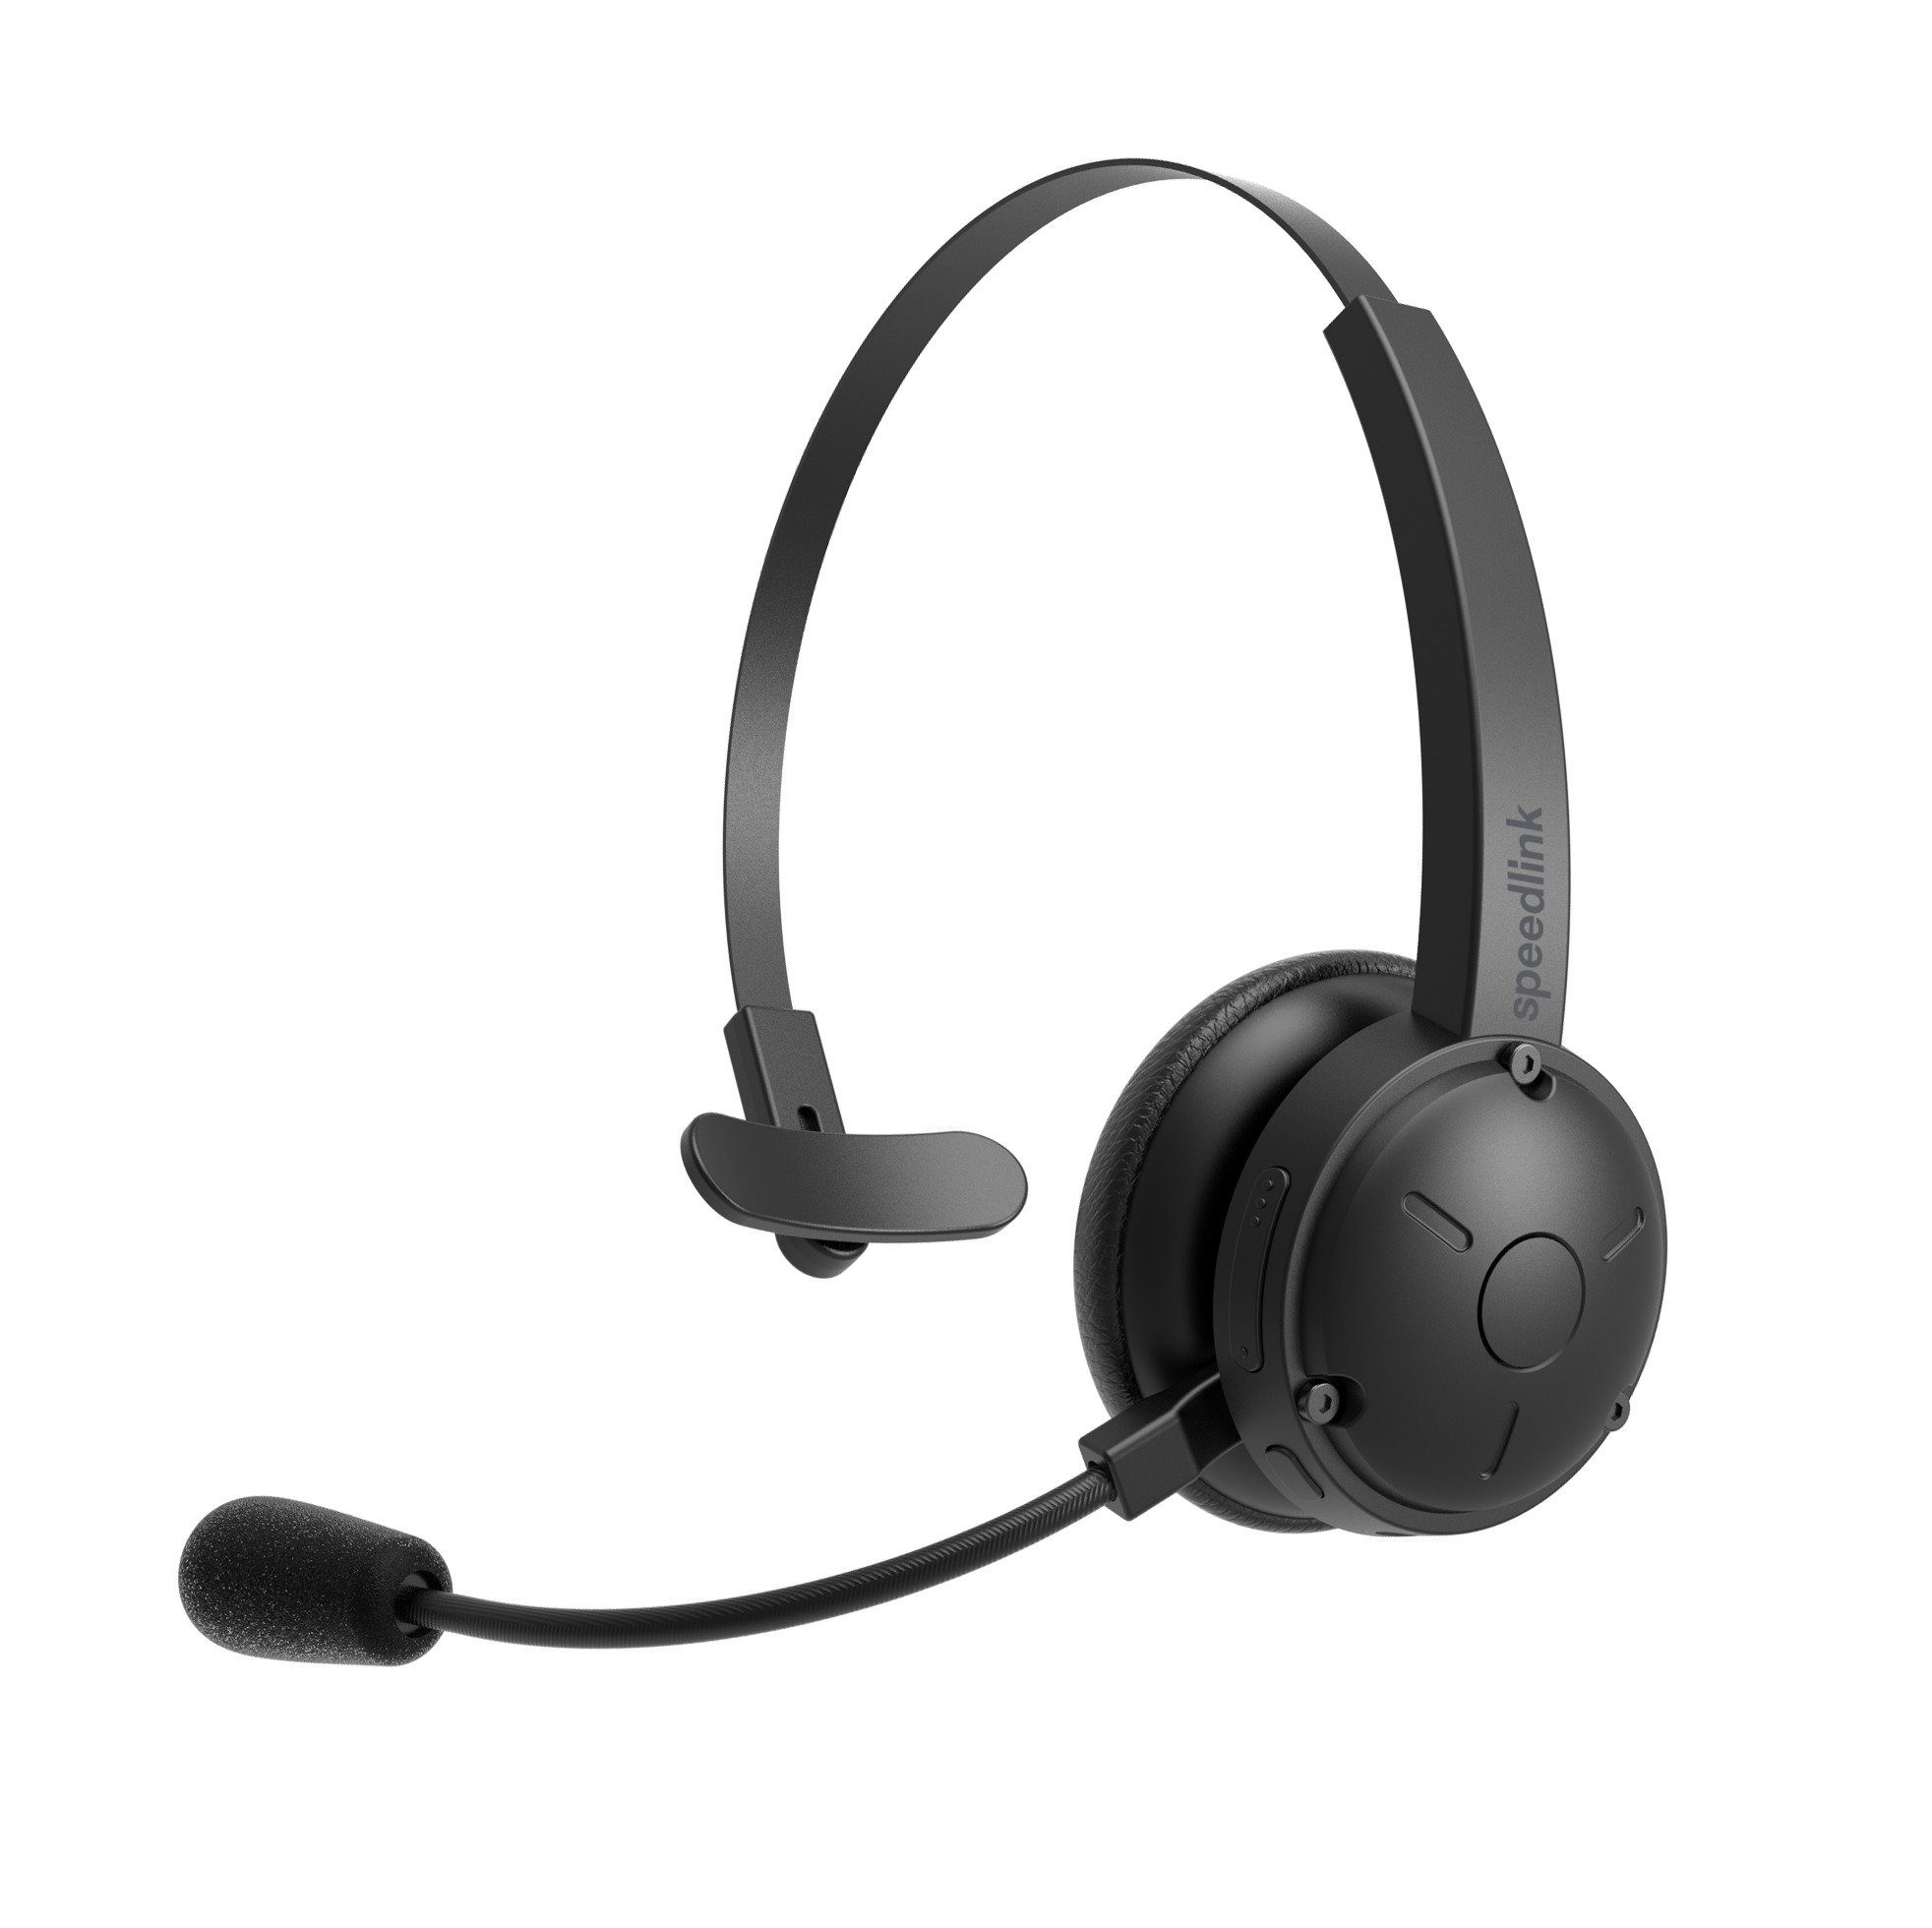 Speedlink SONA PRO Bluetooth Chat Wireless-Headset Noise-Cancelling-Mikrofon) Headset (mit